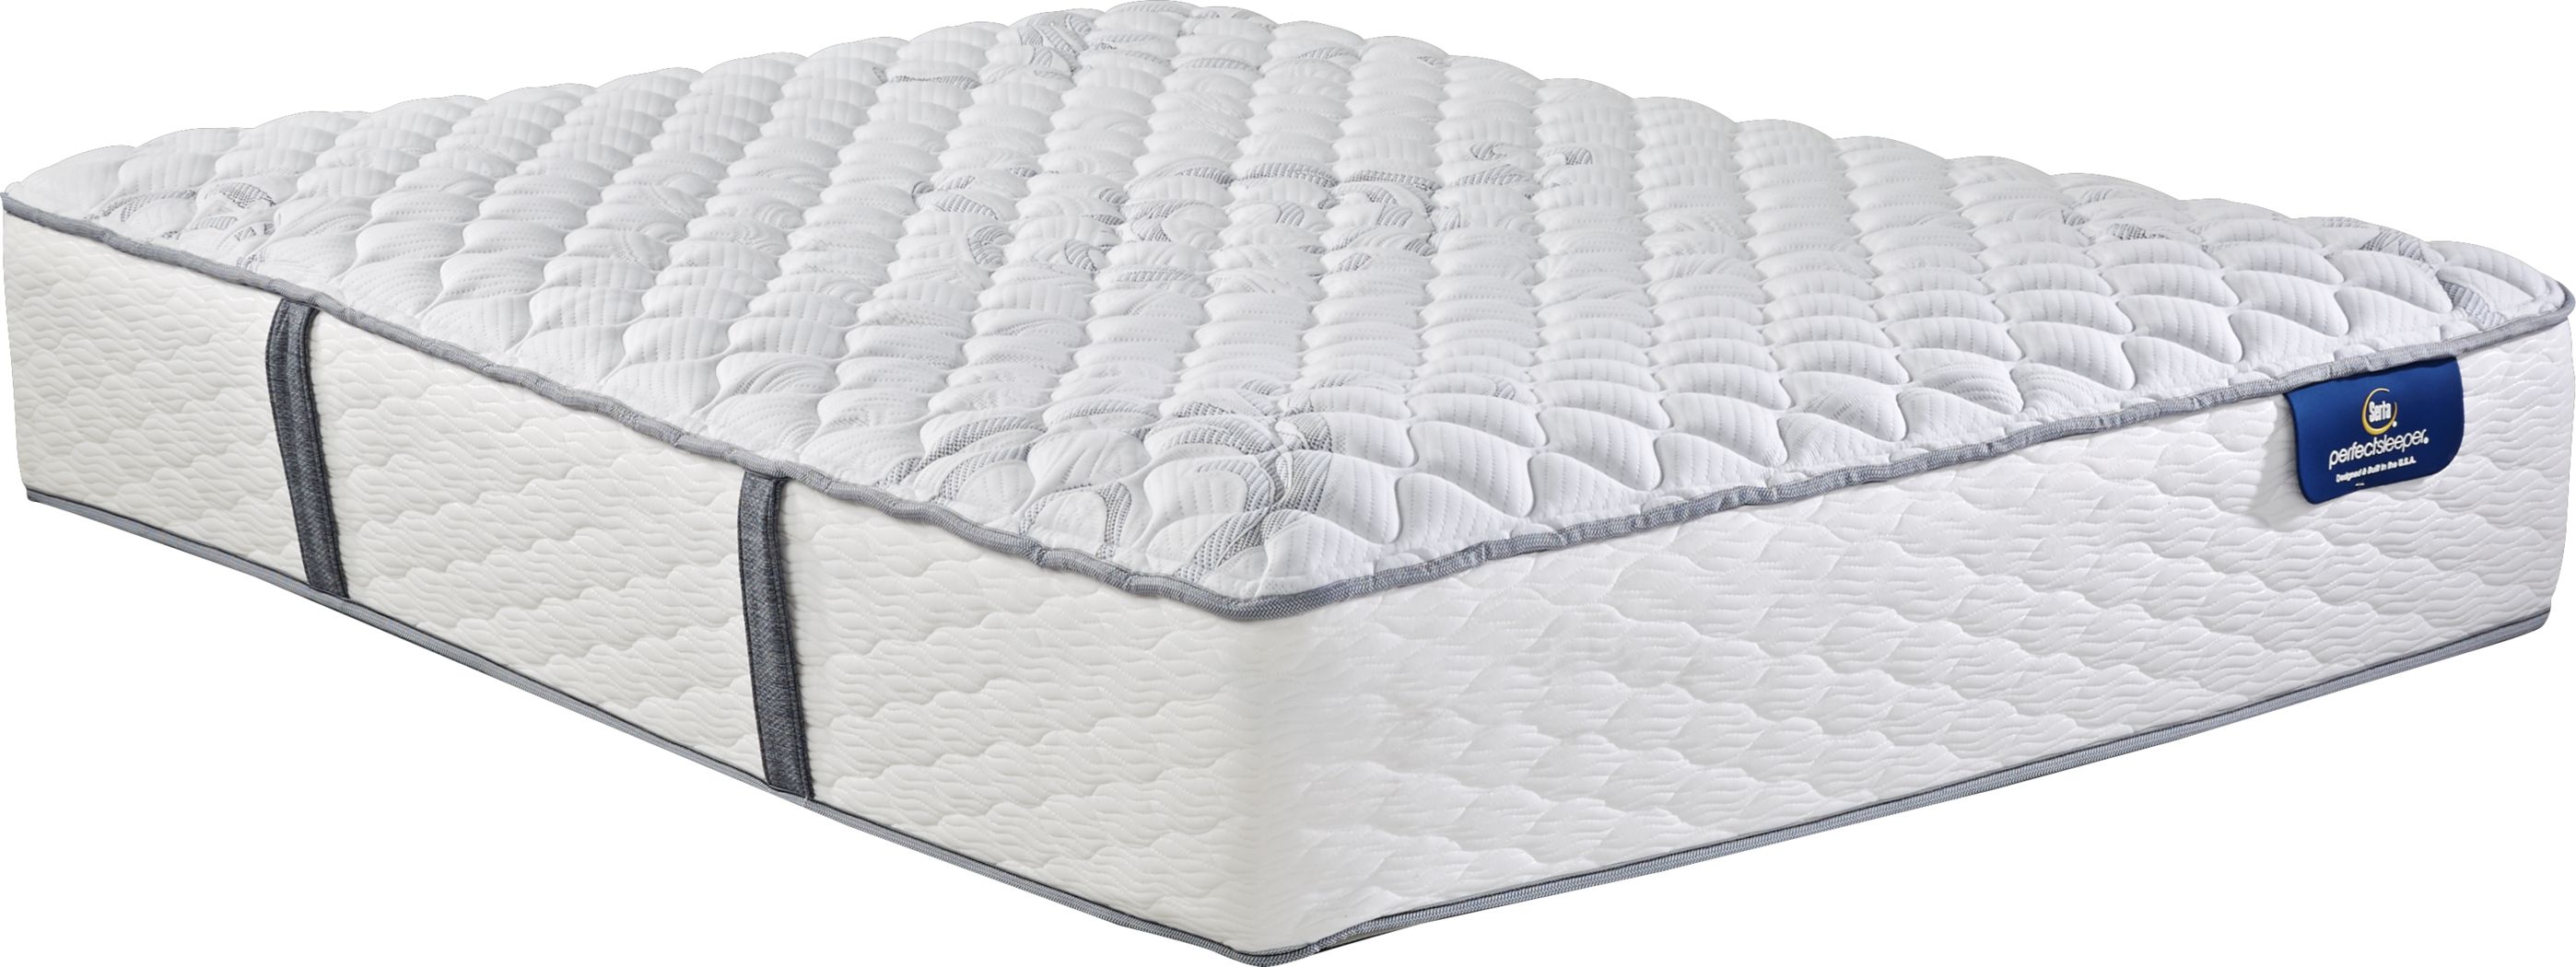 serta elite whitepond mattress